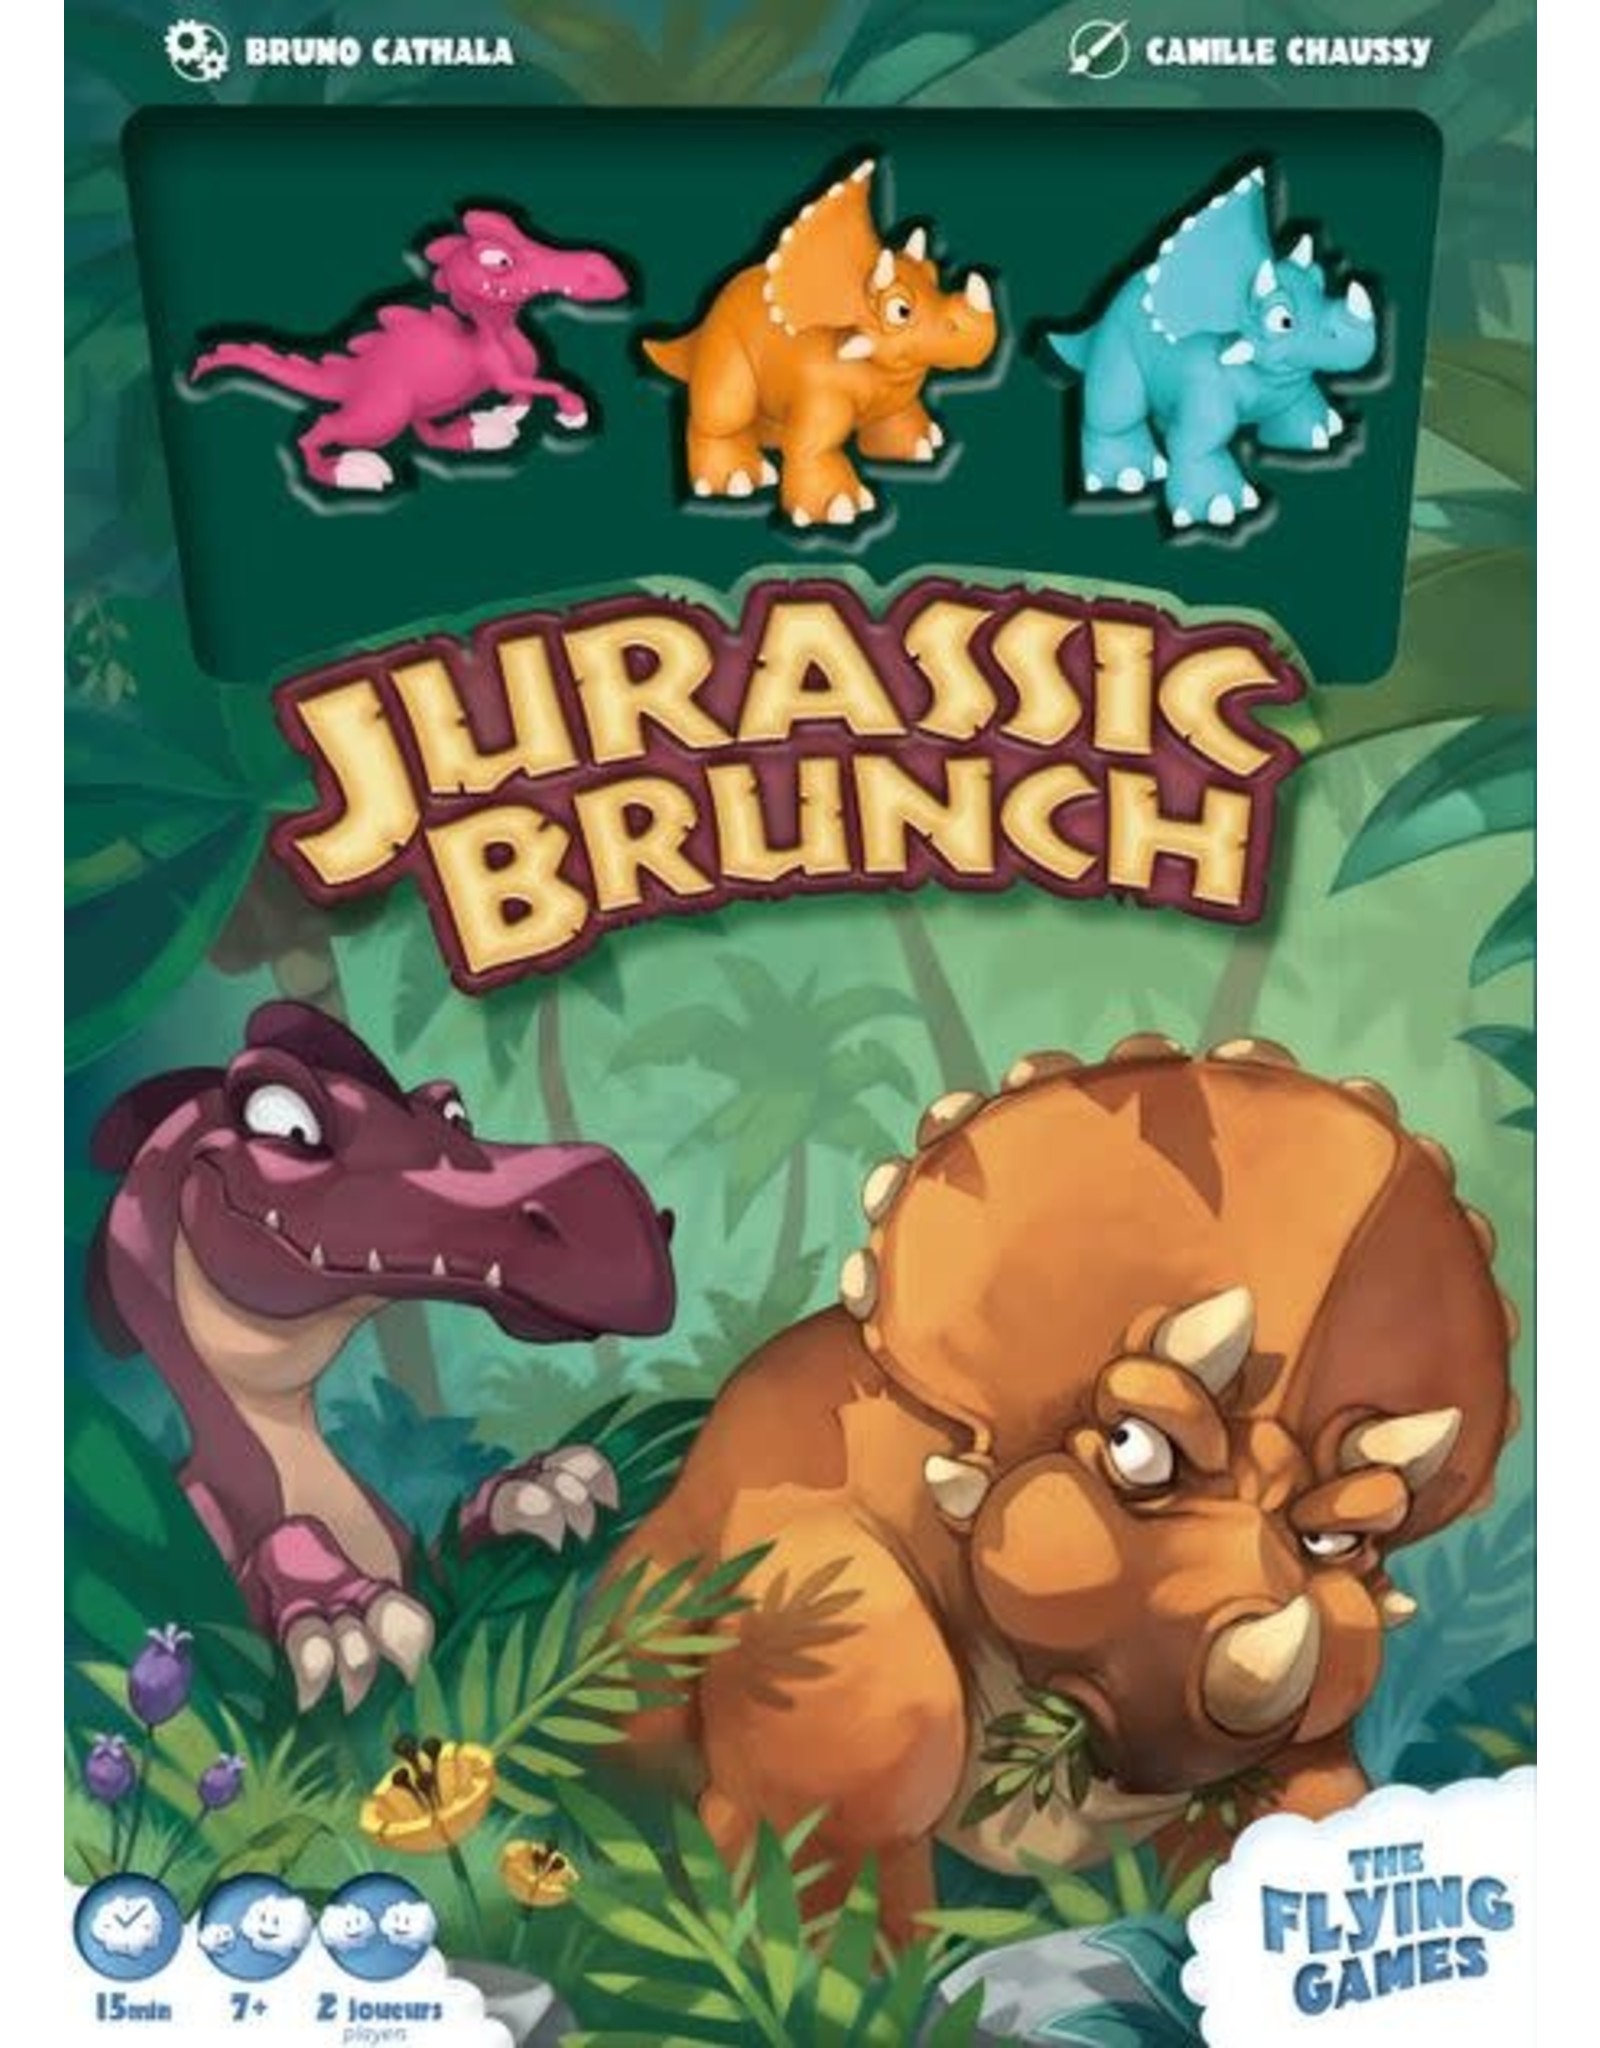 The Flying Games Jurassic Brunch